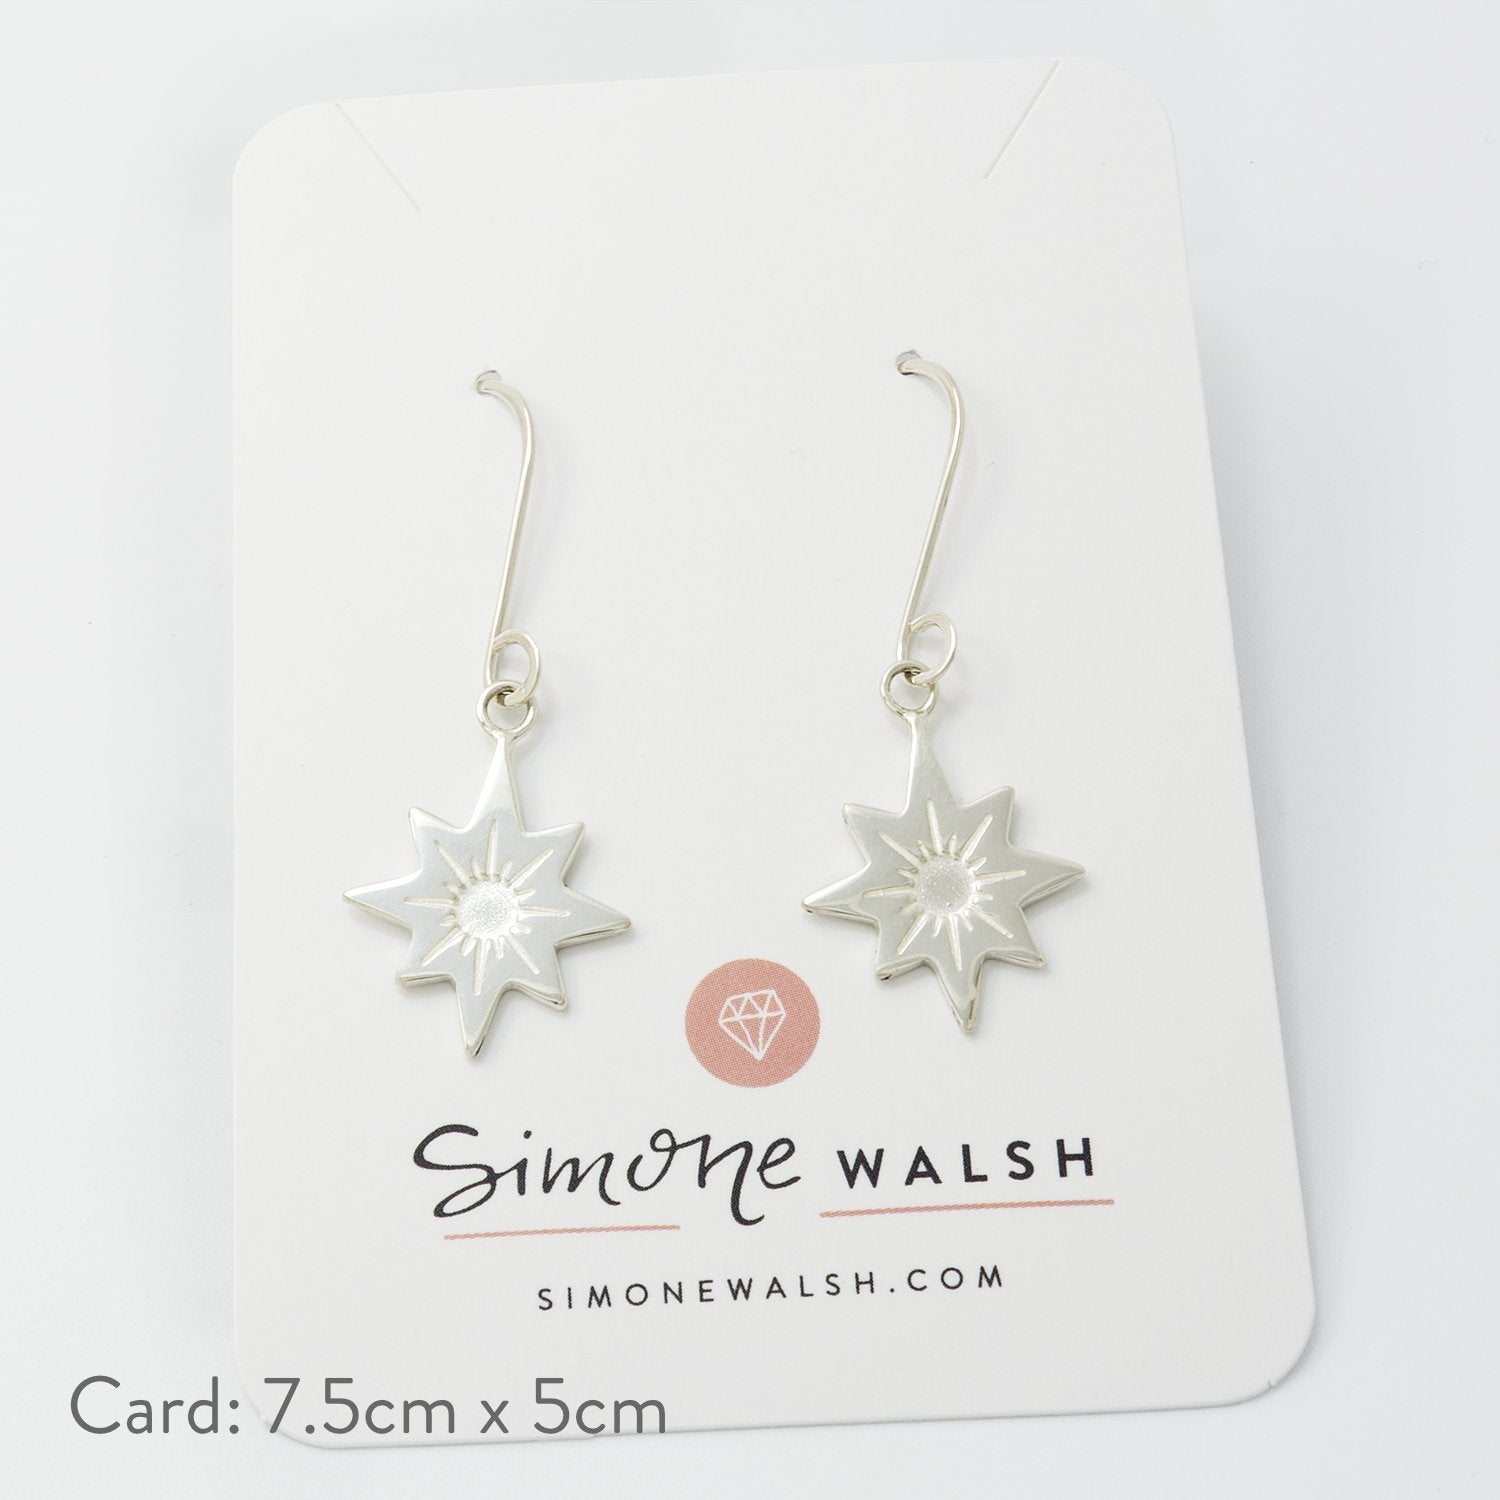 Guiding star drop earrings - Simone Walsh Jewellery Australia